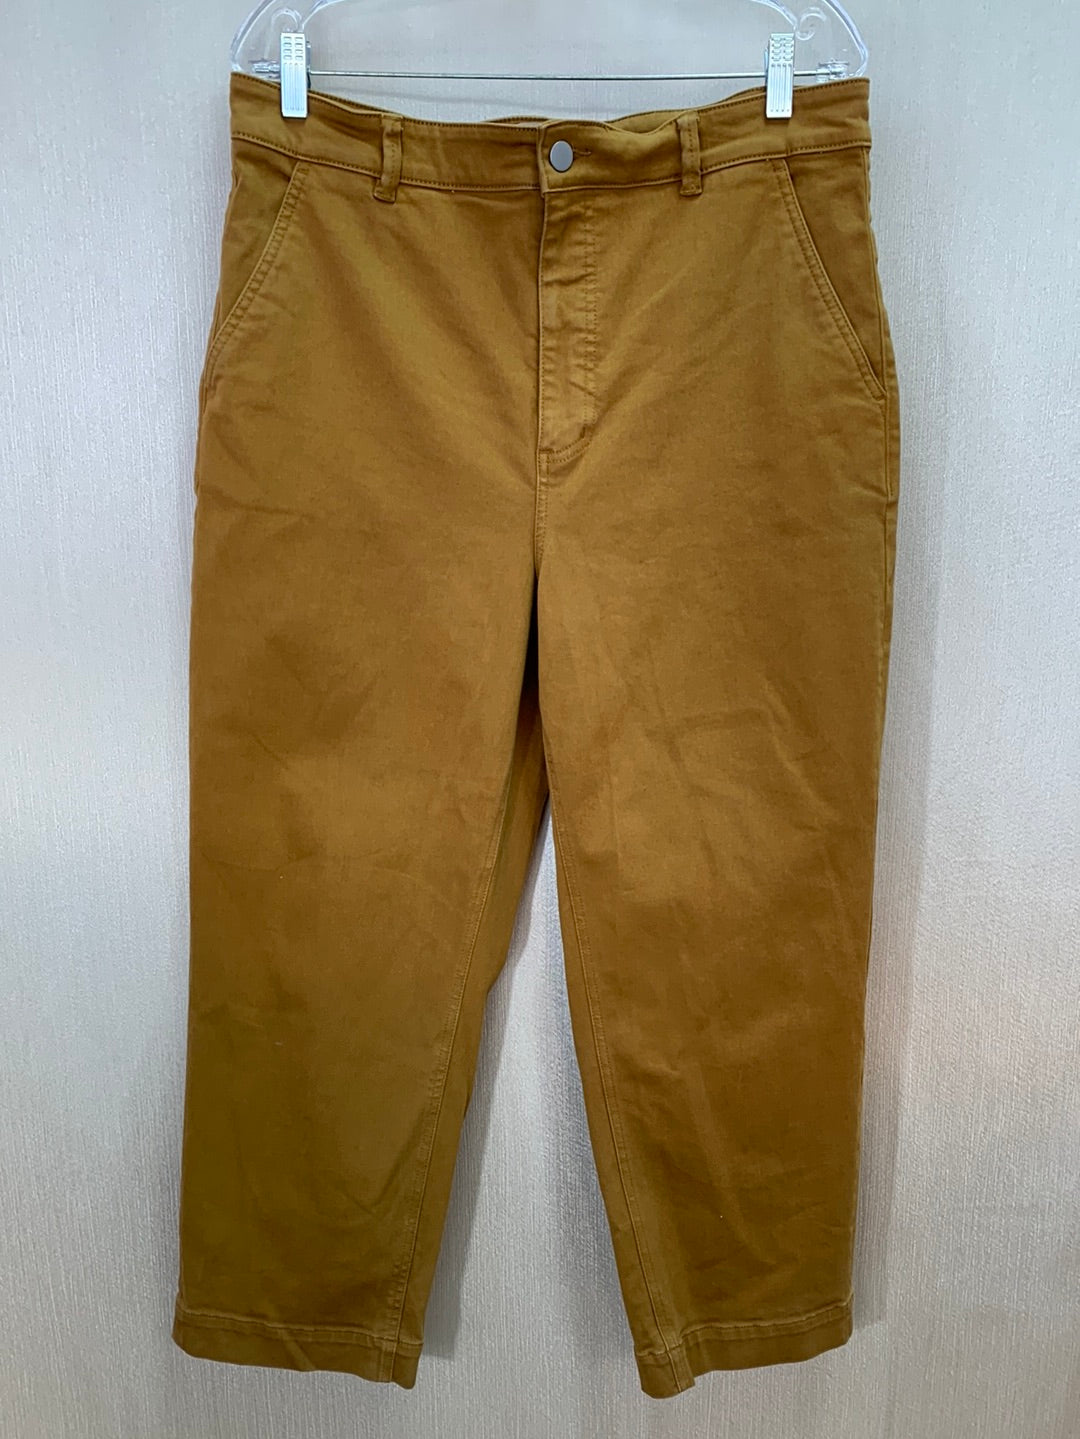 EVERLANE caramel brown Minimalist Cropped Straight Leg Jeans - 16